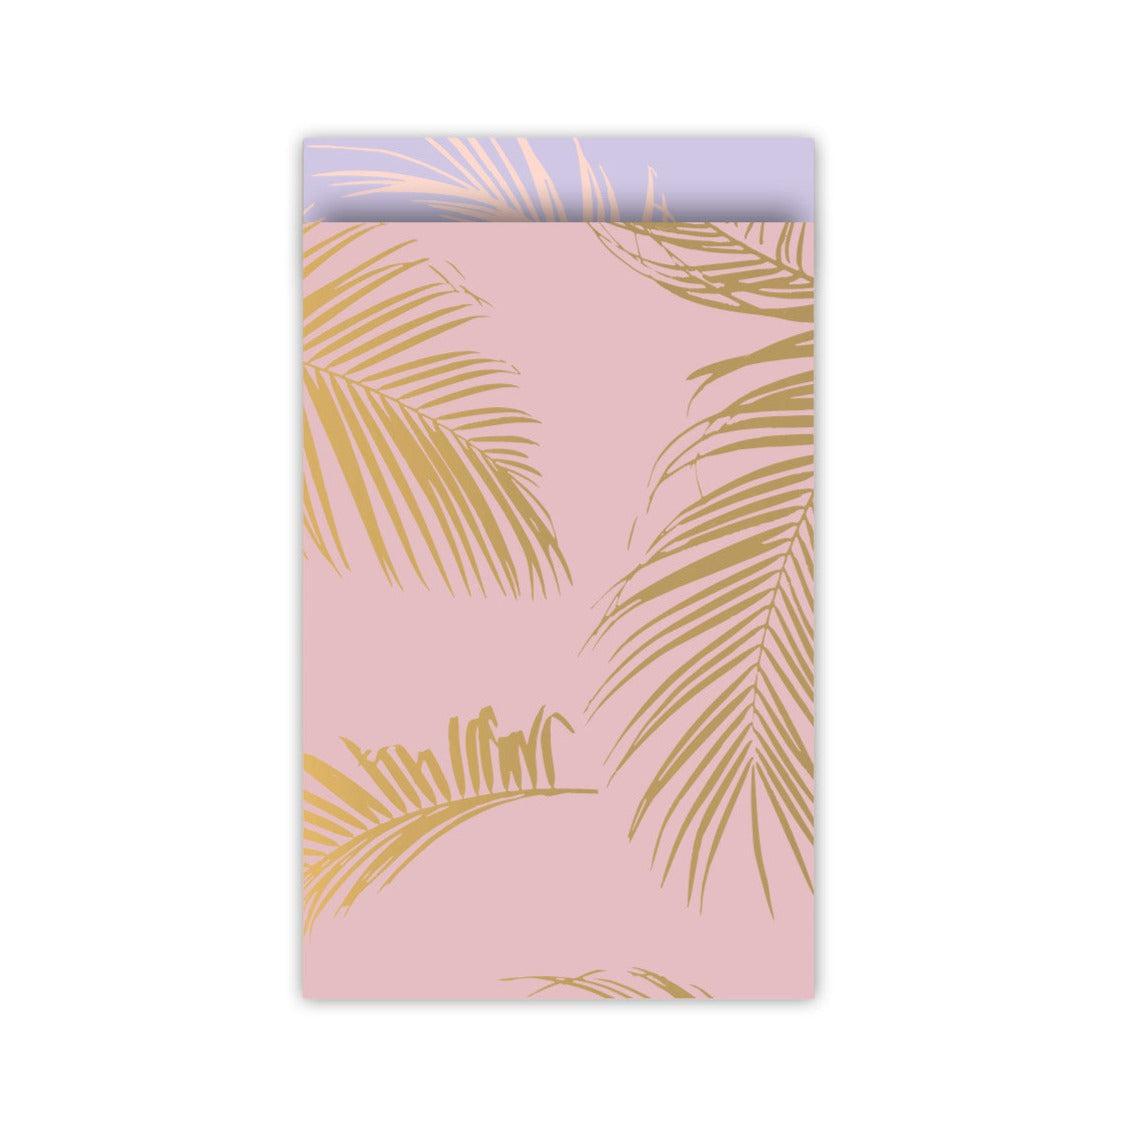 Cadeauzakjes Palm leaves roze/goud 12x19cm - 5 stuks-Gifts-Kraaltjes van Renate